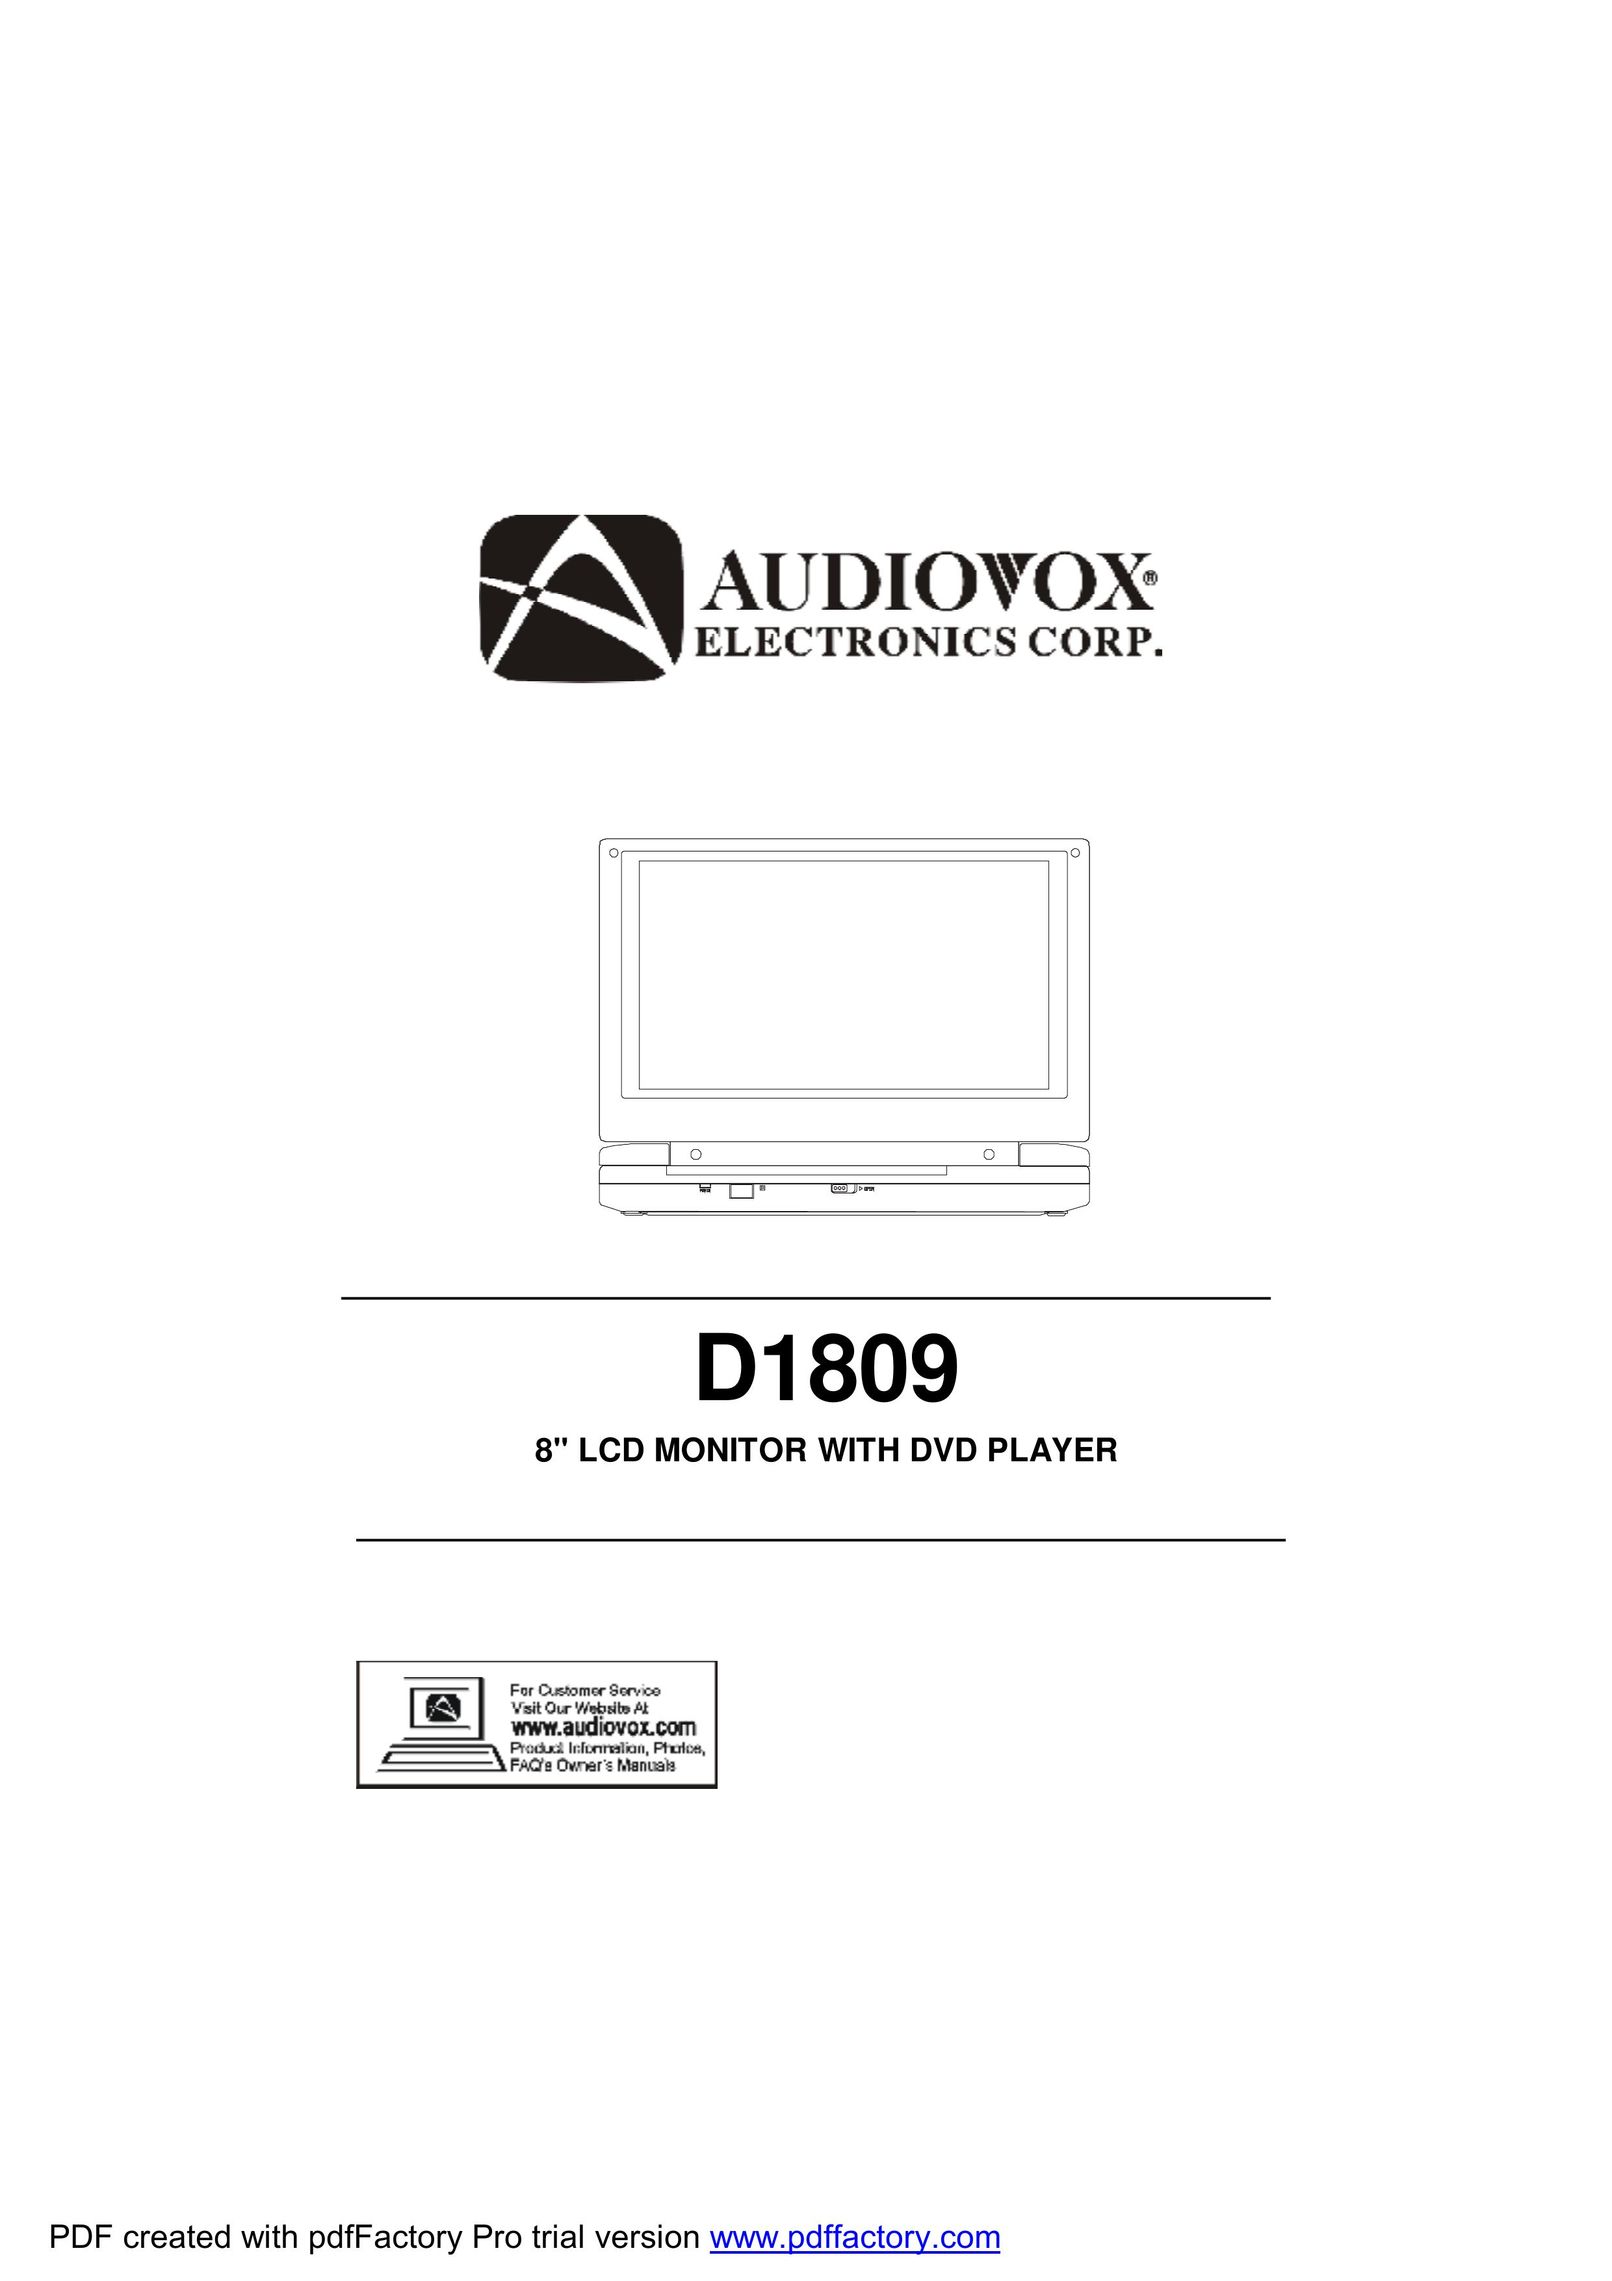 Audiovox D1809 DVD Player User Manual